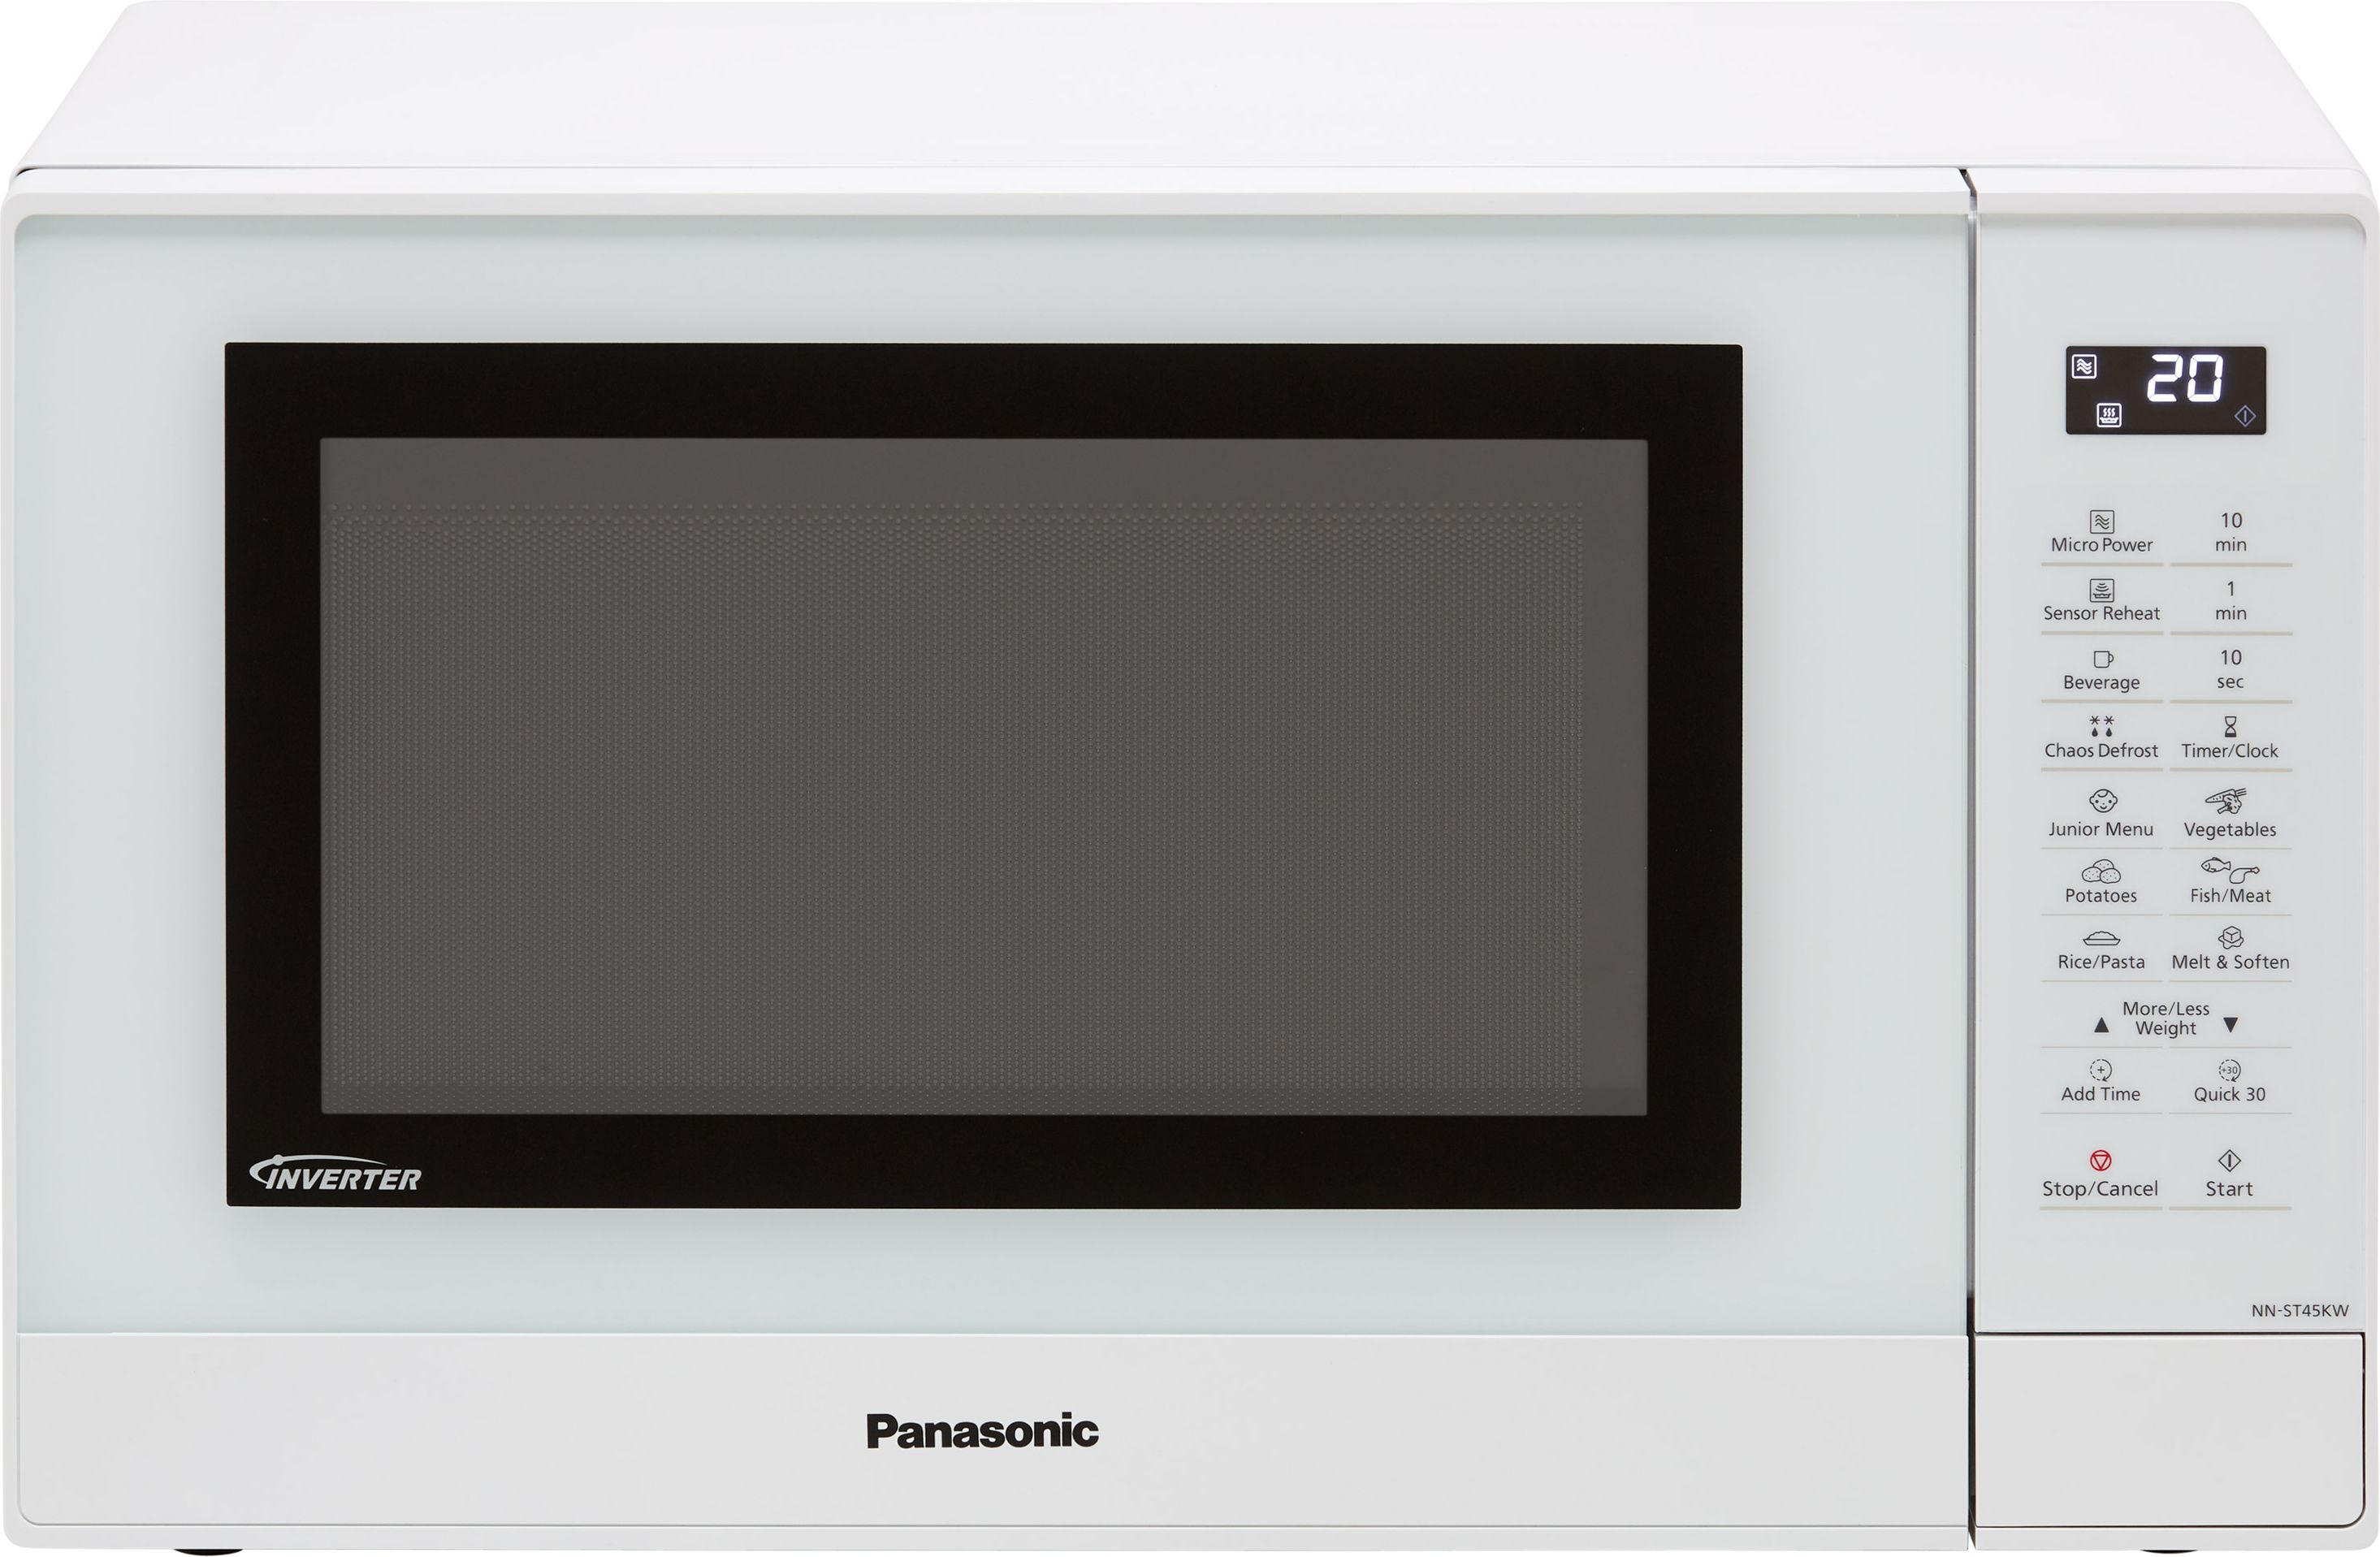 Panasonic NN-ST45KWBPQ 31cm tall, 52cm wide, Freestanding Microwave - White, White